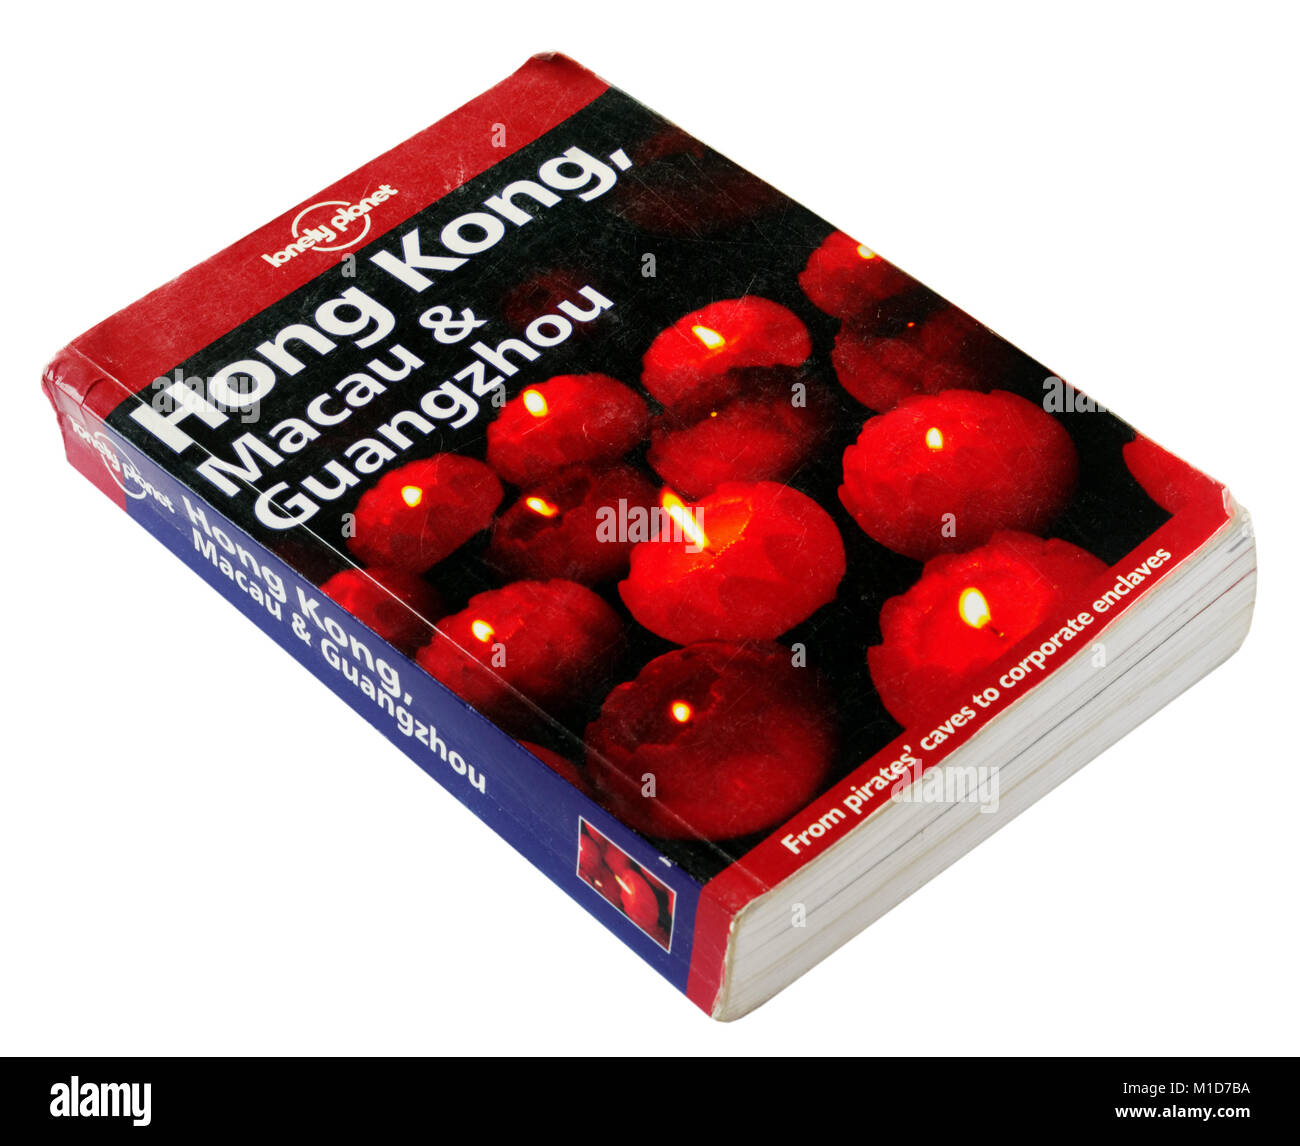 13th edition Lonely Planet Hong Kong & Macau 13th Ed. City Guide 